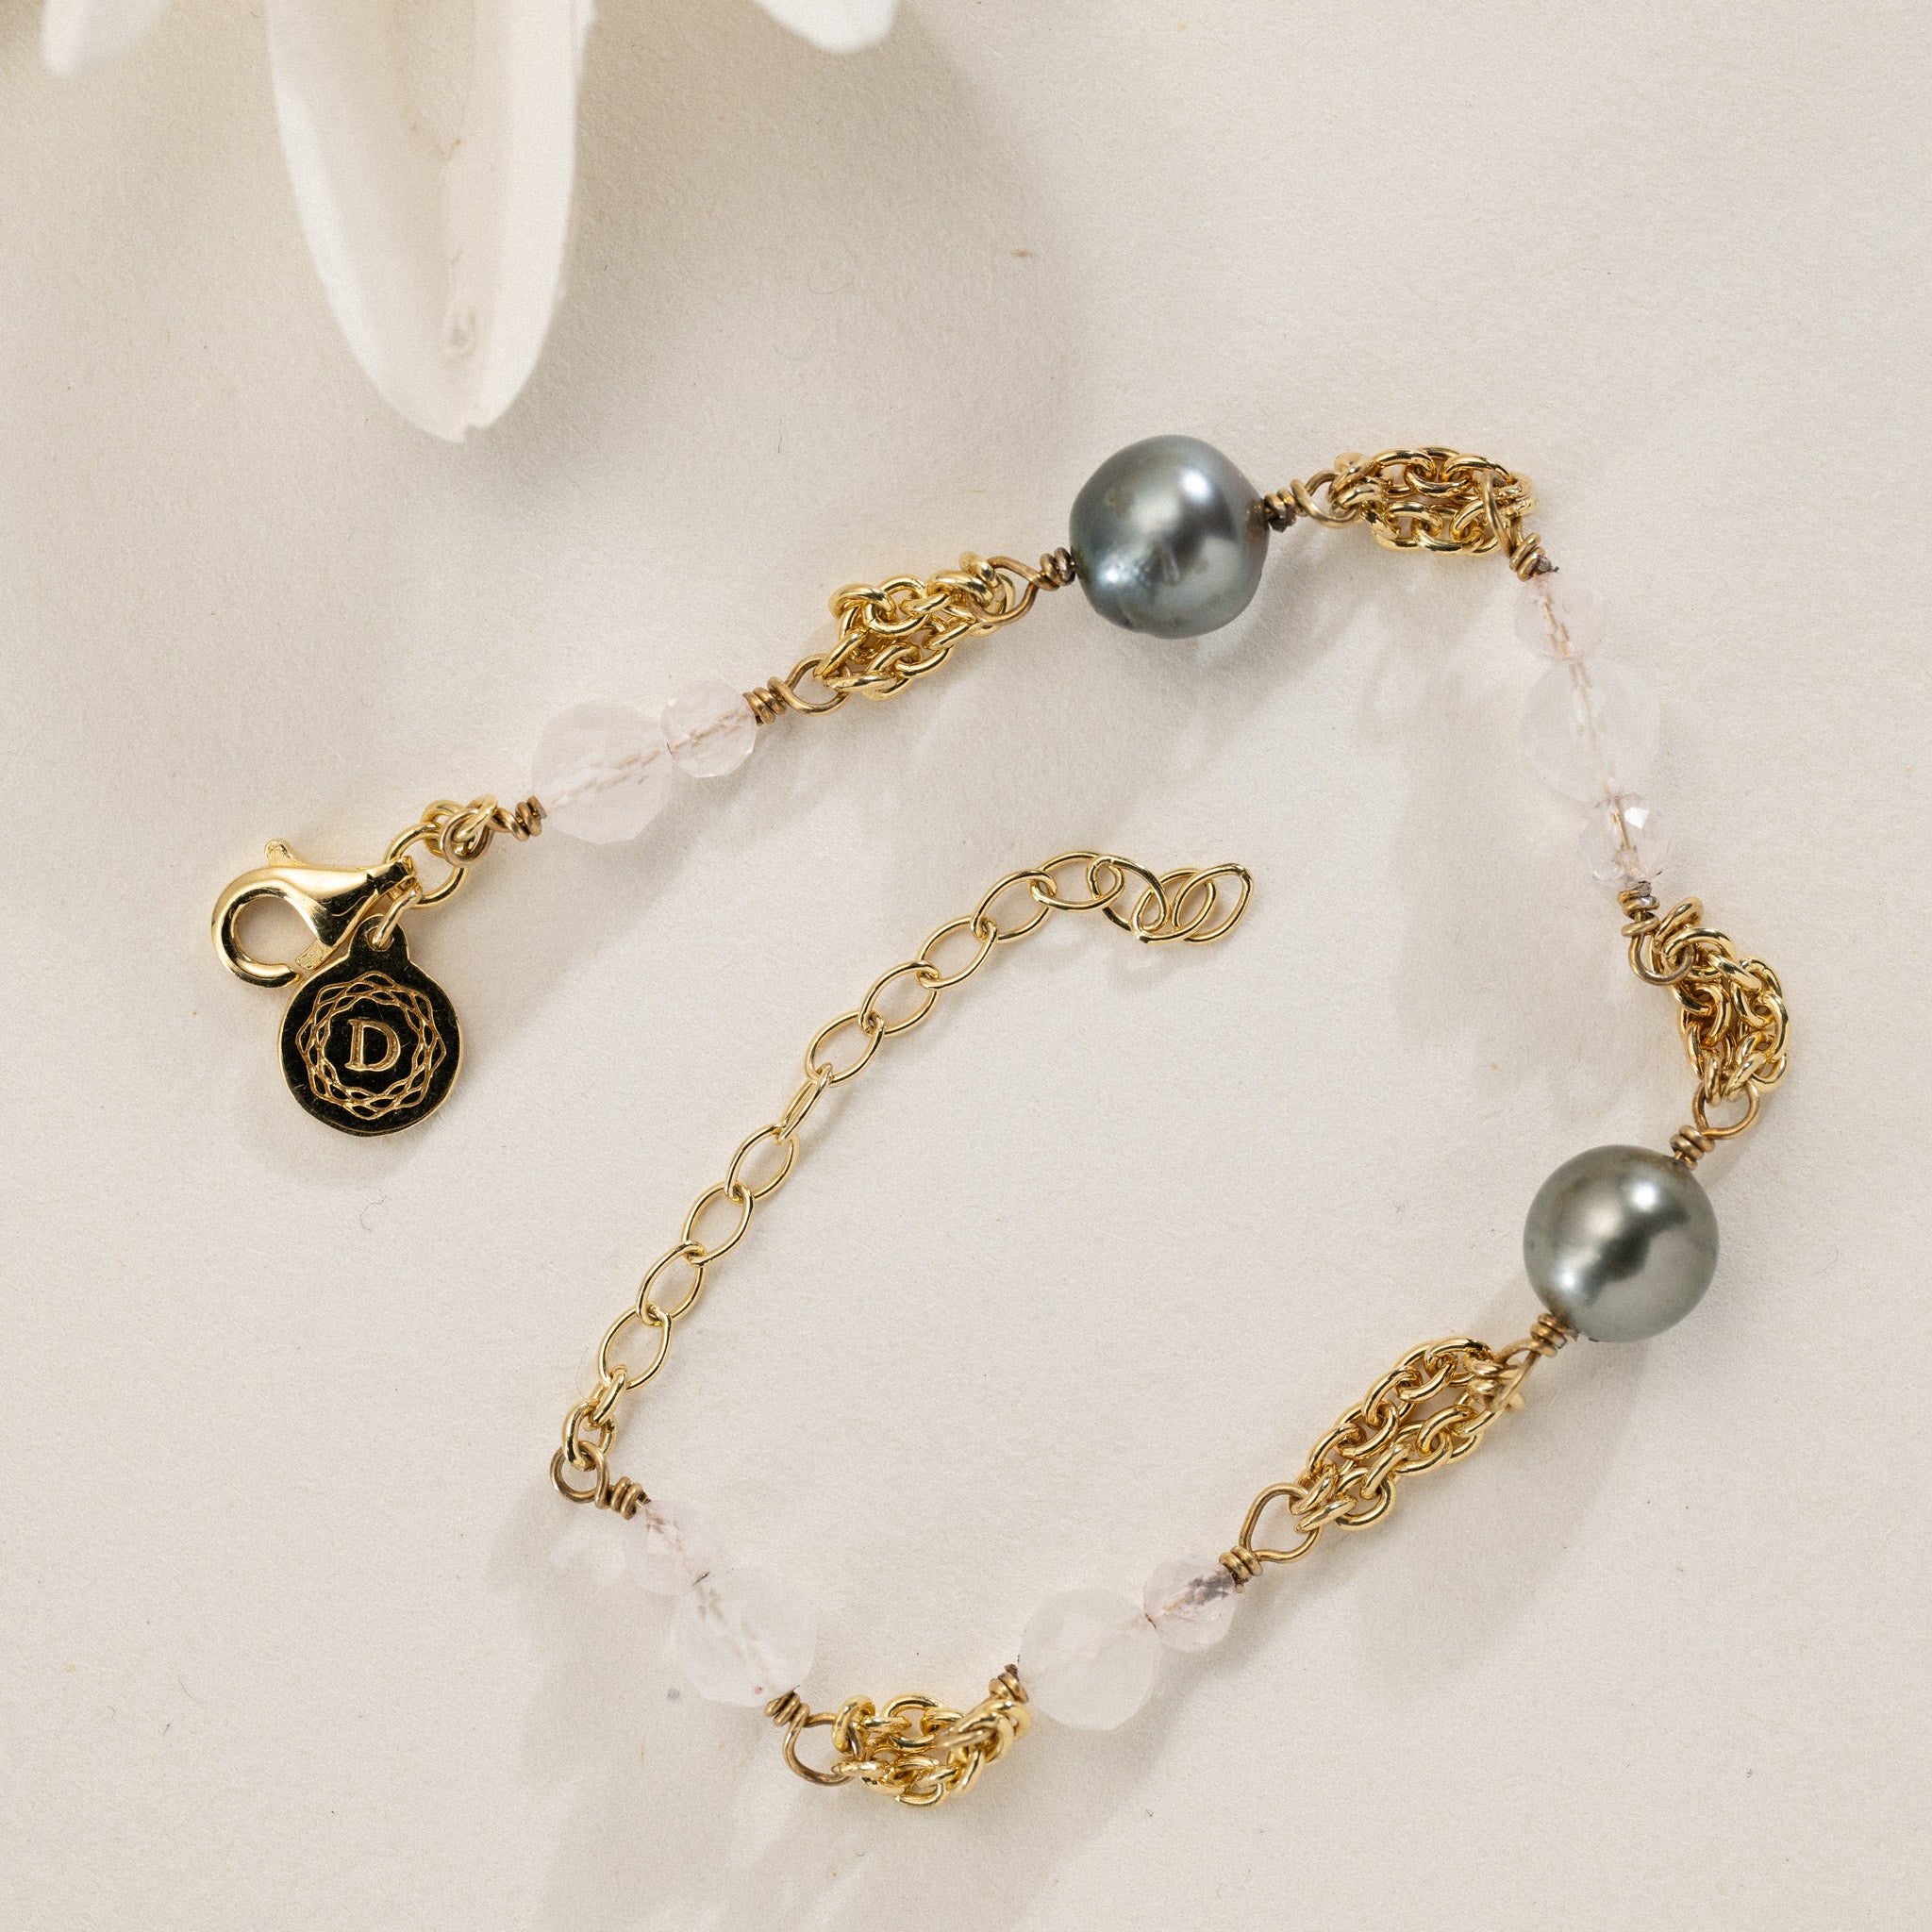 No. 12 - Peacock tahiti pearl bracelet in vermiel gold & semi-precious stones